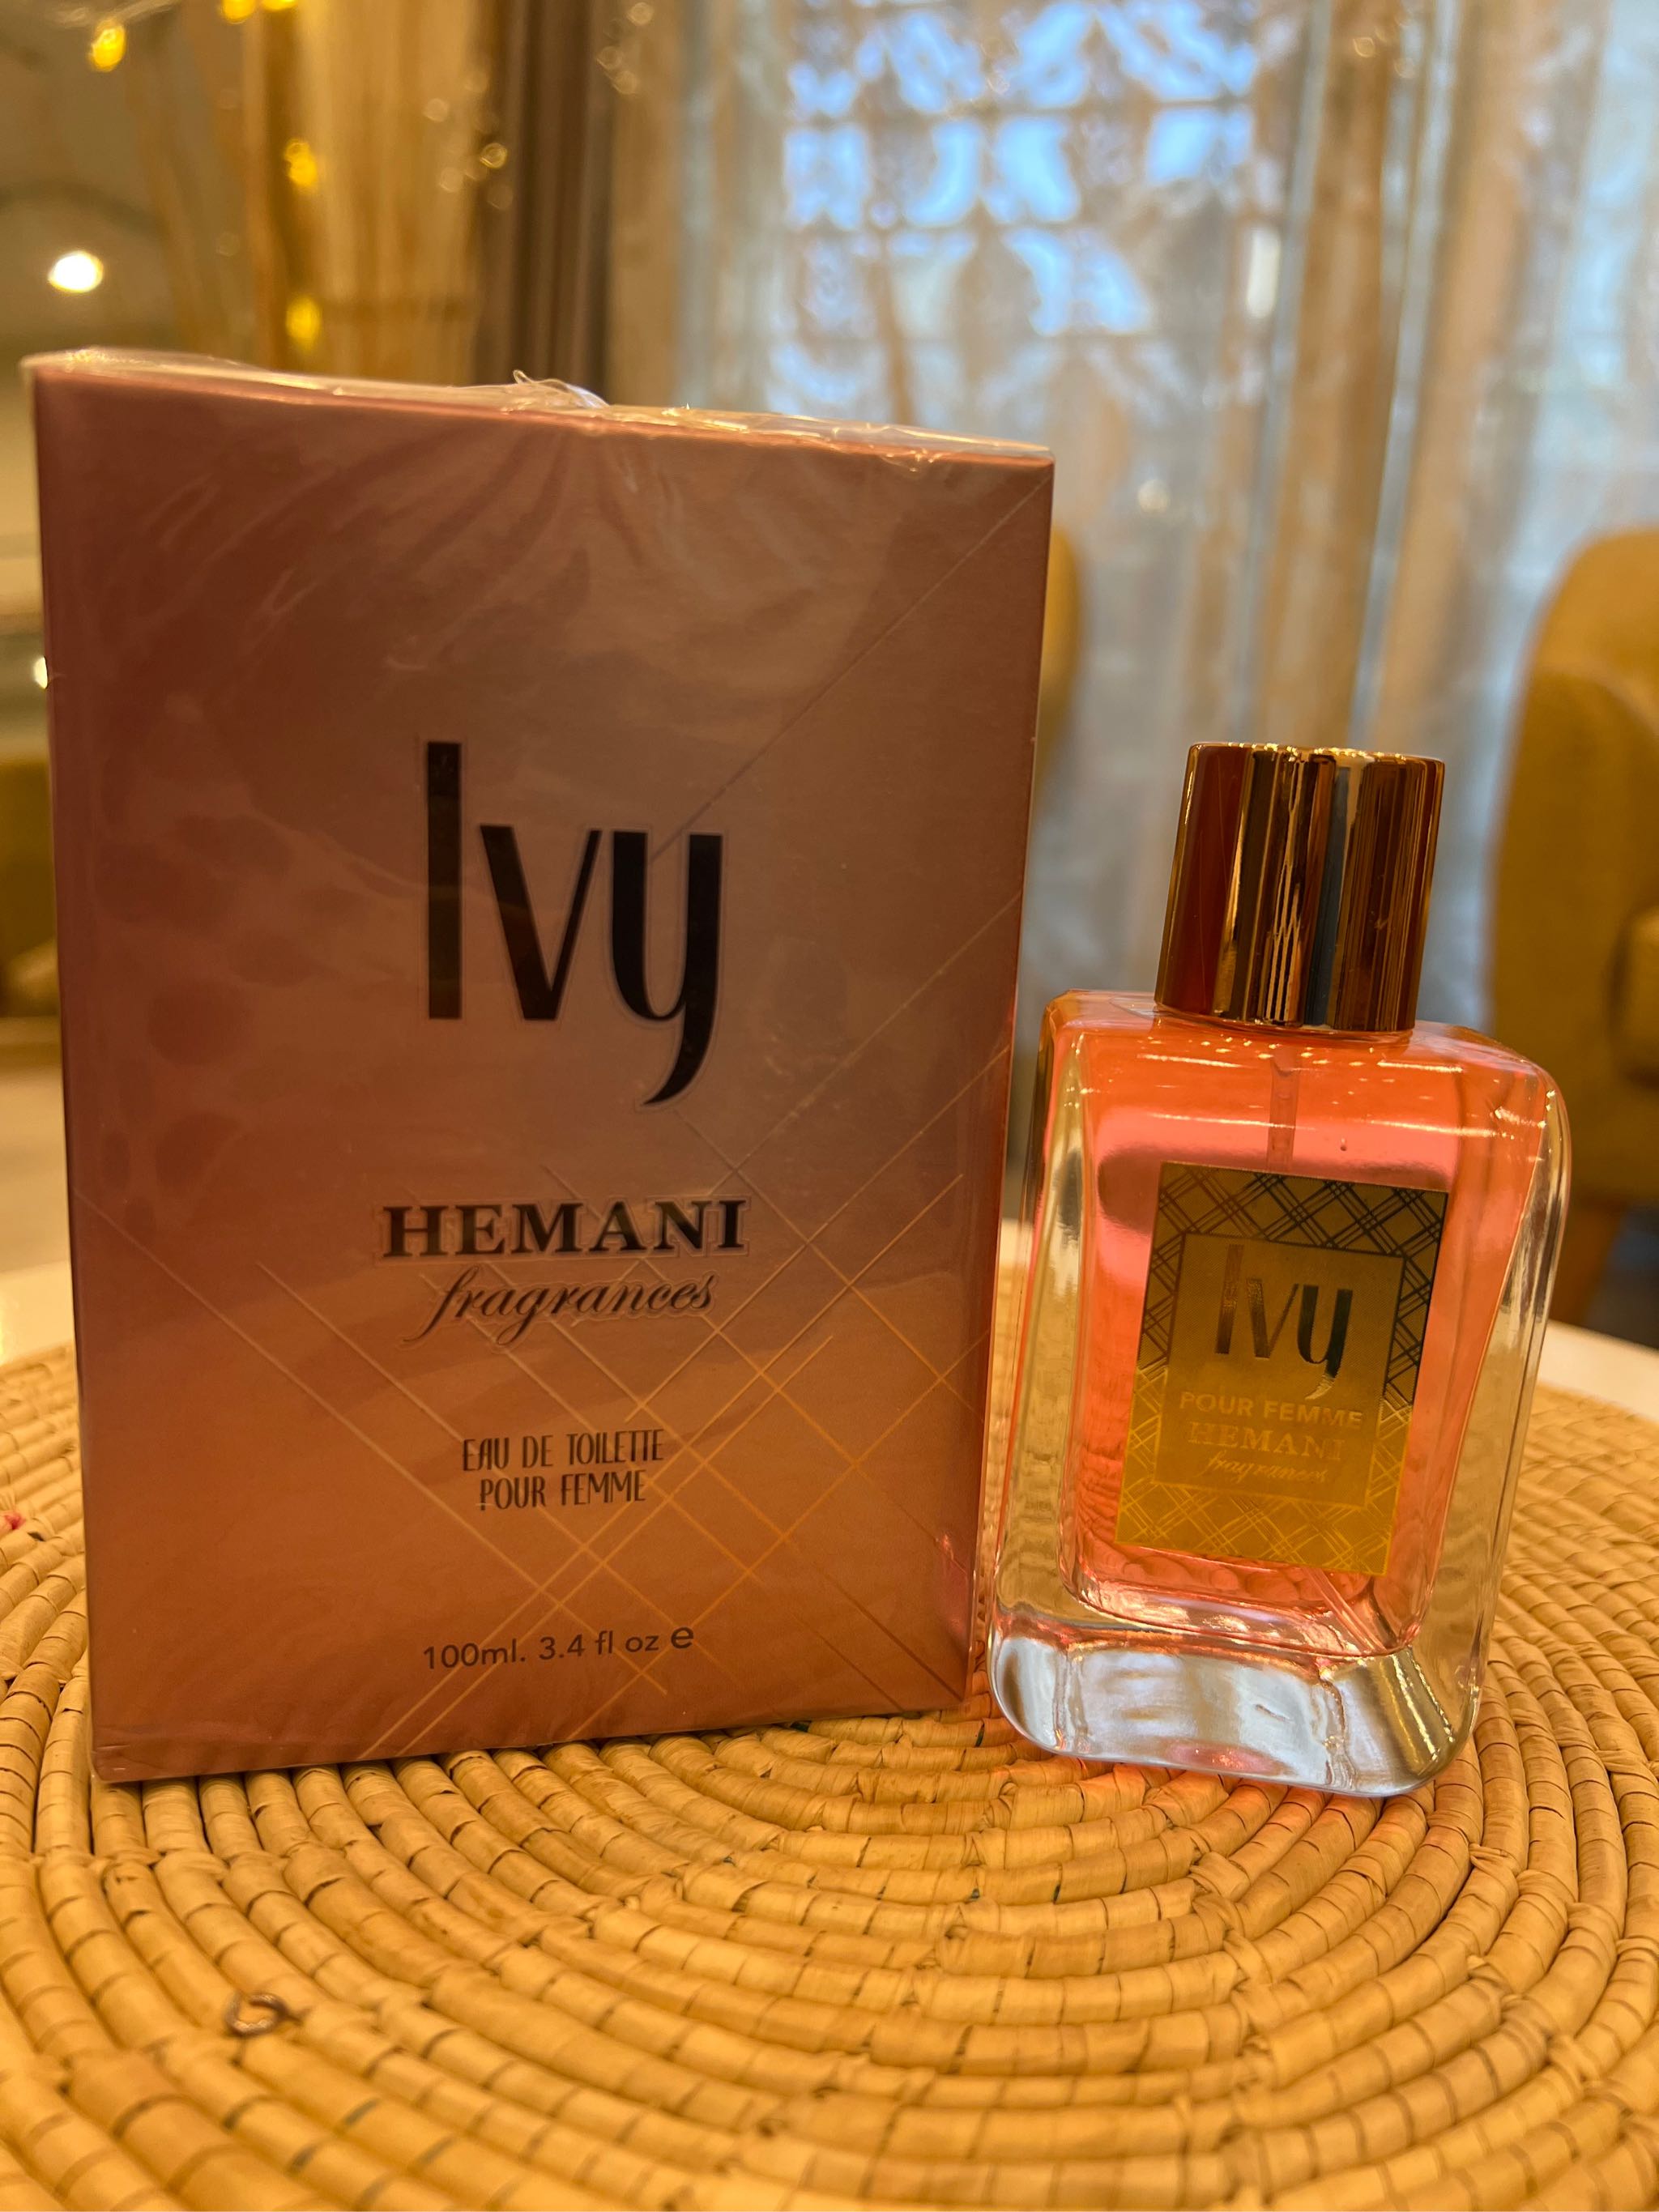 perfume lvy